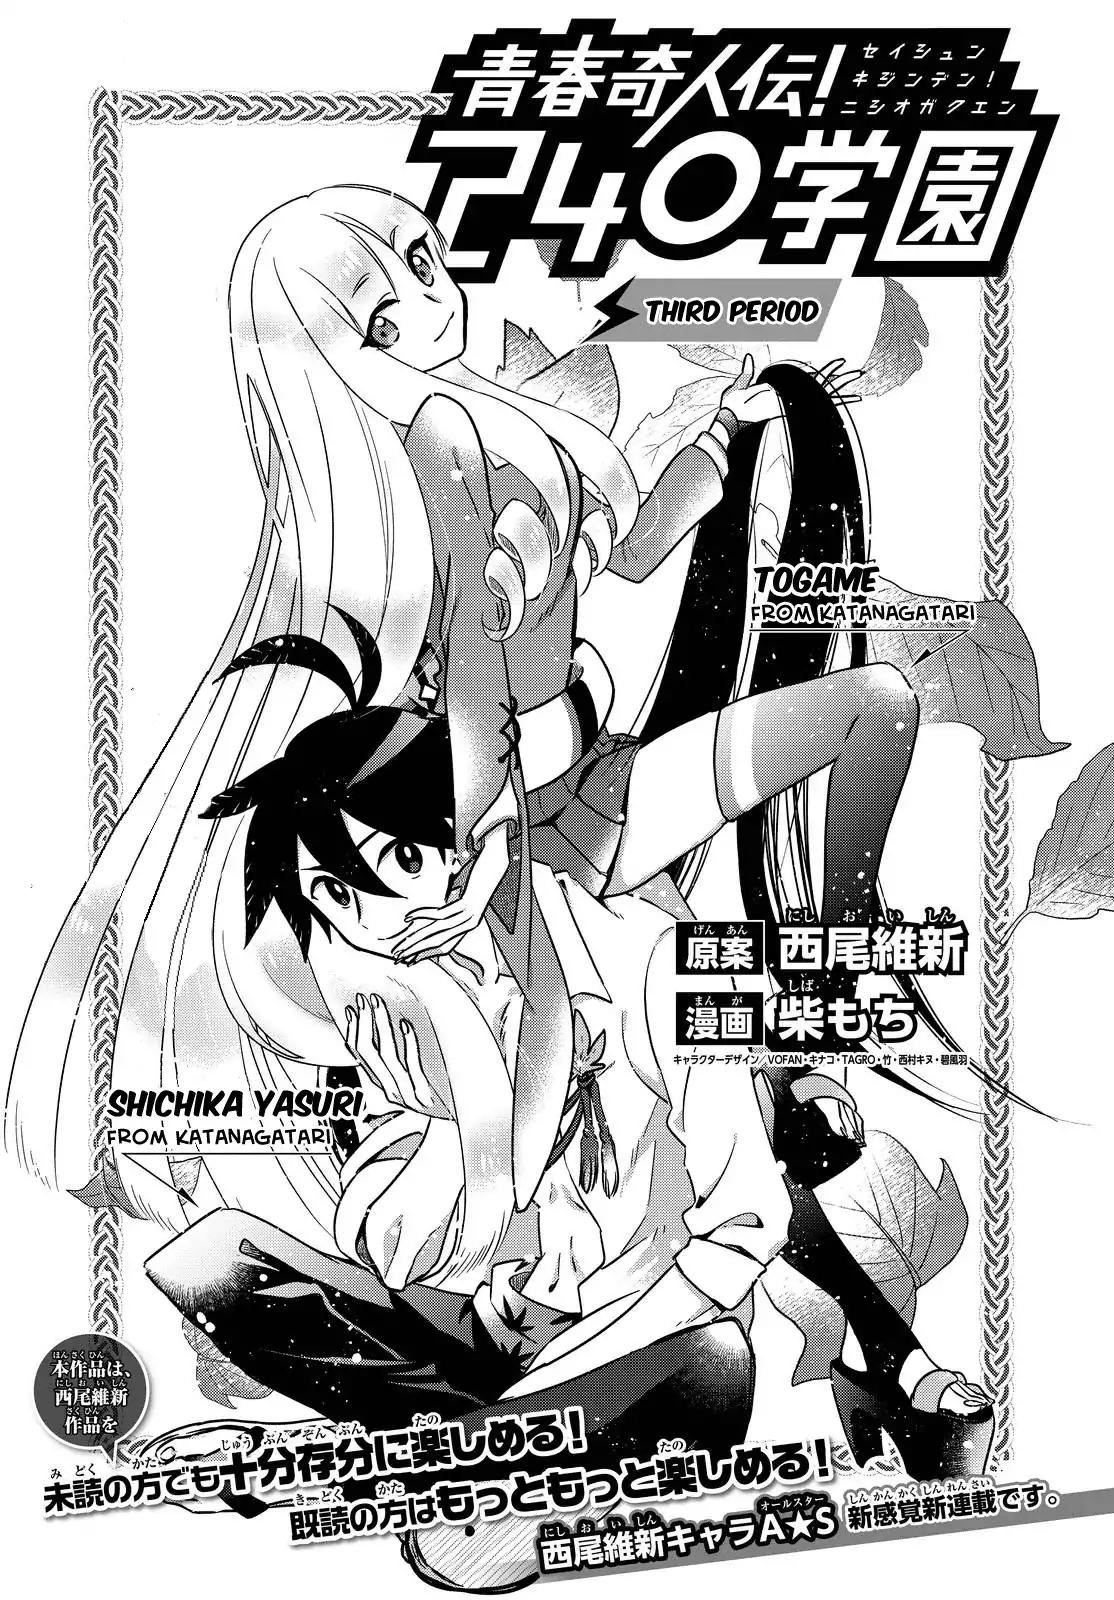 Seishun Kijinden! Nishio Gakuen Vol.1 Chapter 3